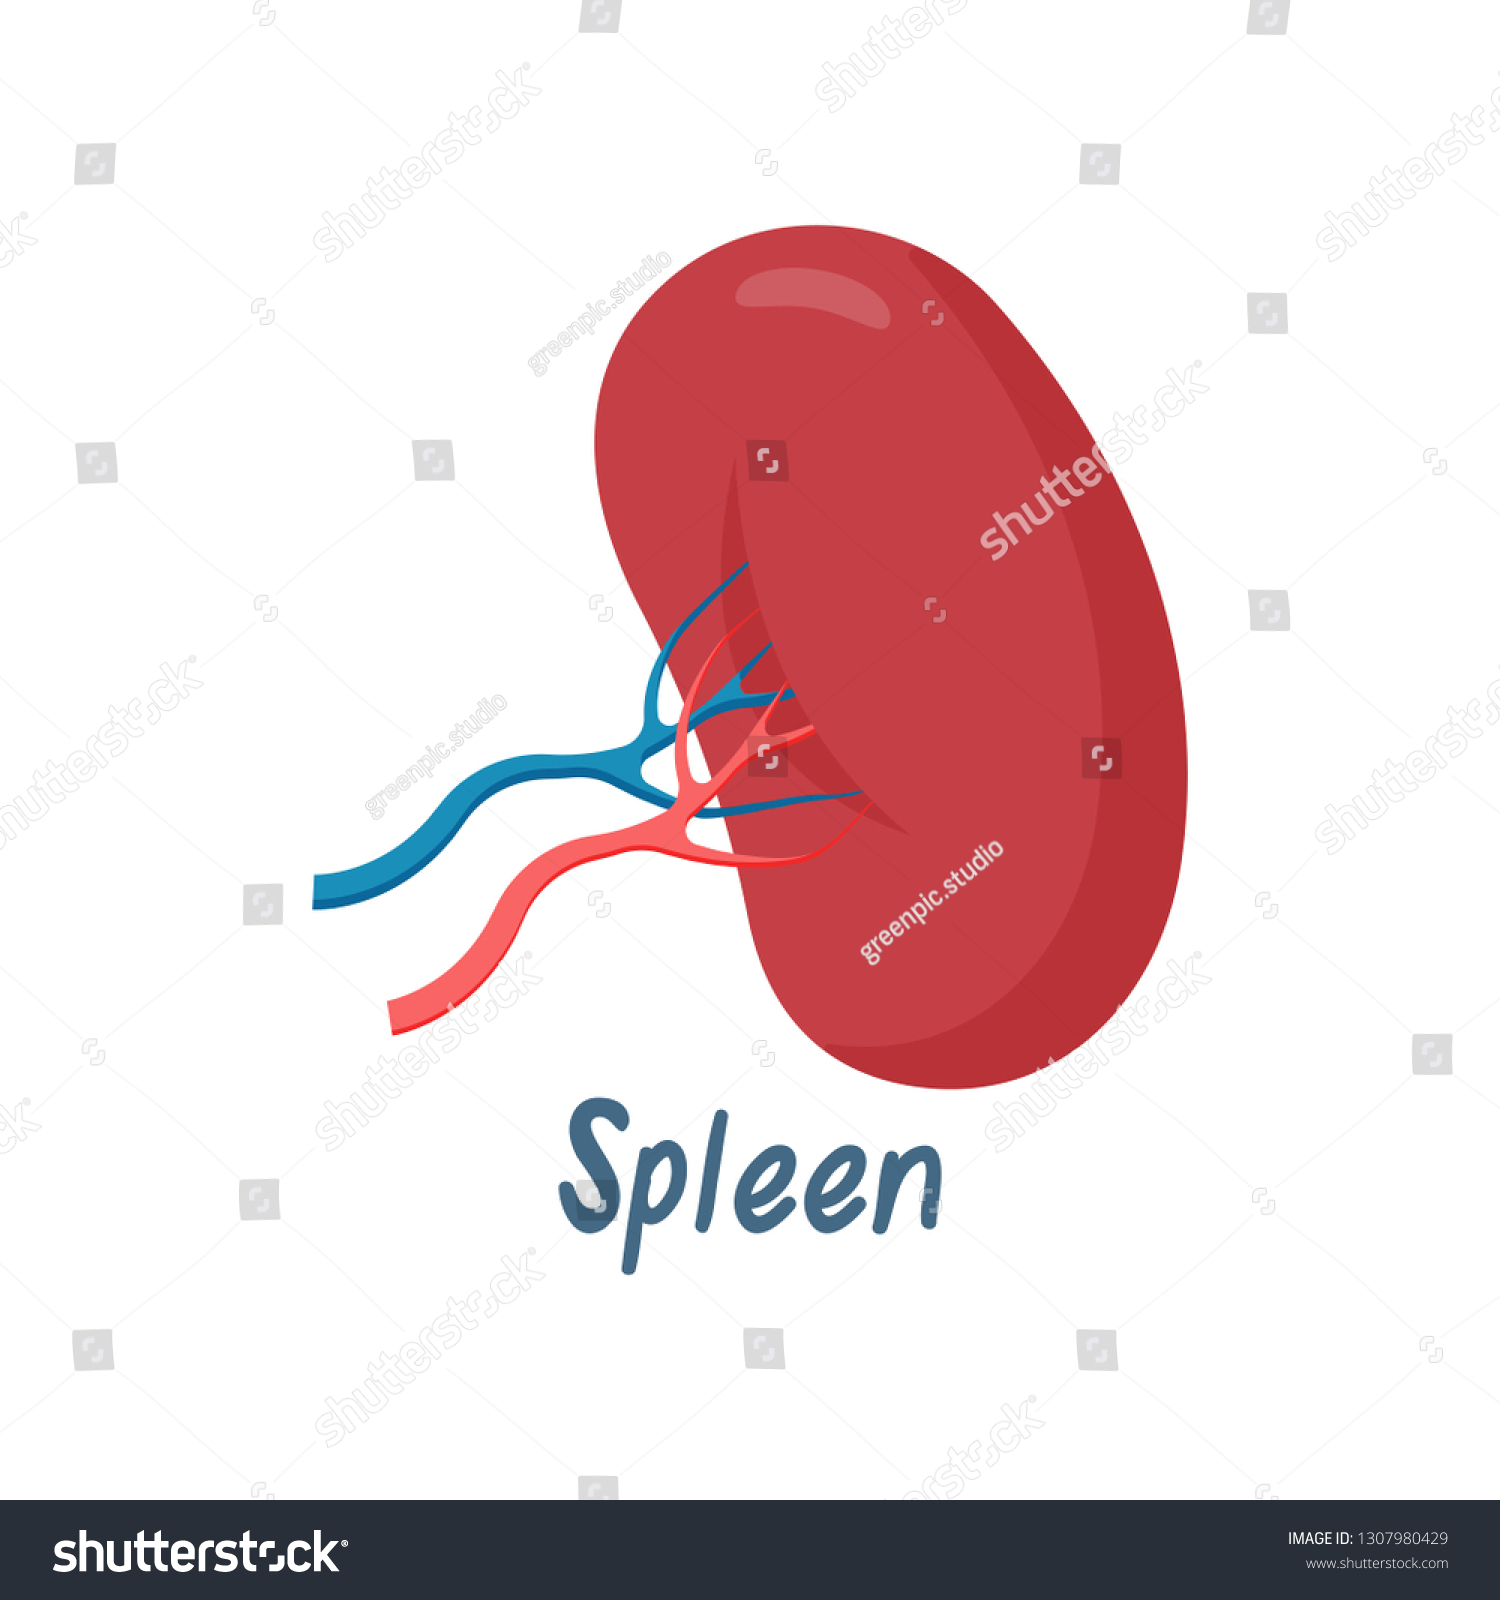 Spleen Healthy Internal Organ Human Anatomy Stock Vector (Royalty Free ...